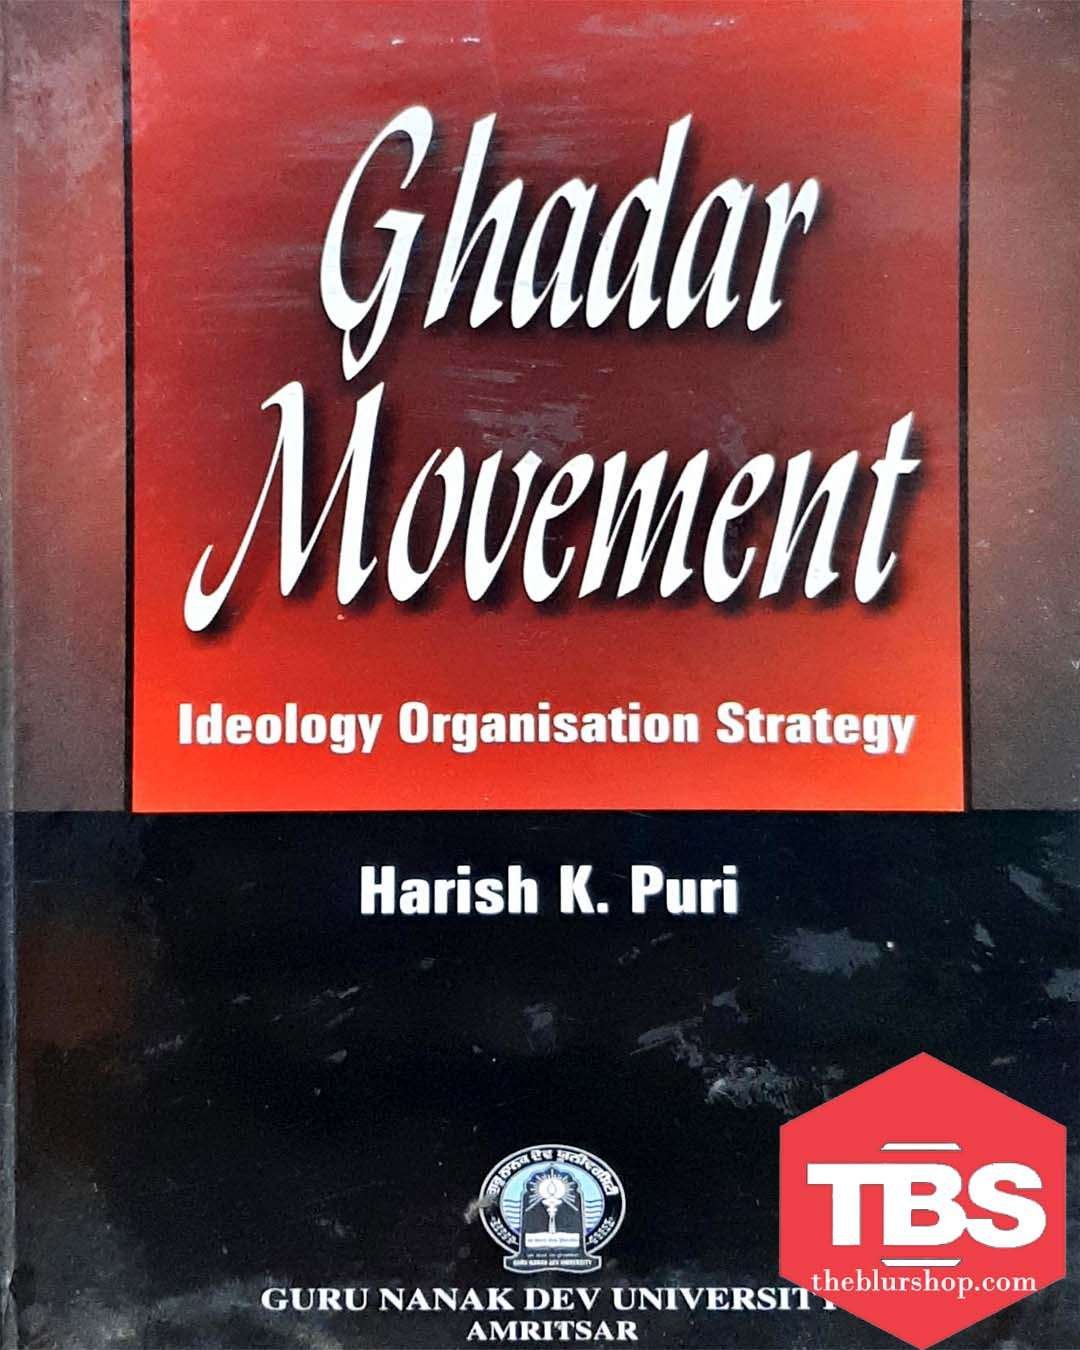 Ghadar Movement: Ideology Organisation Strategy